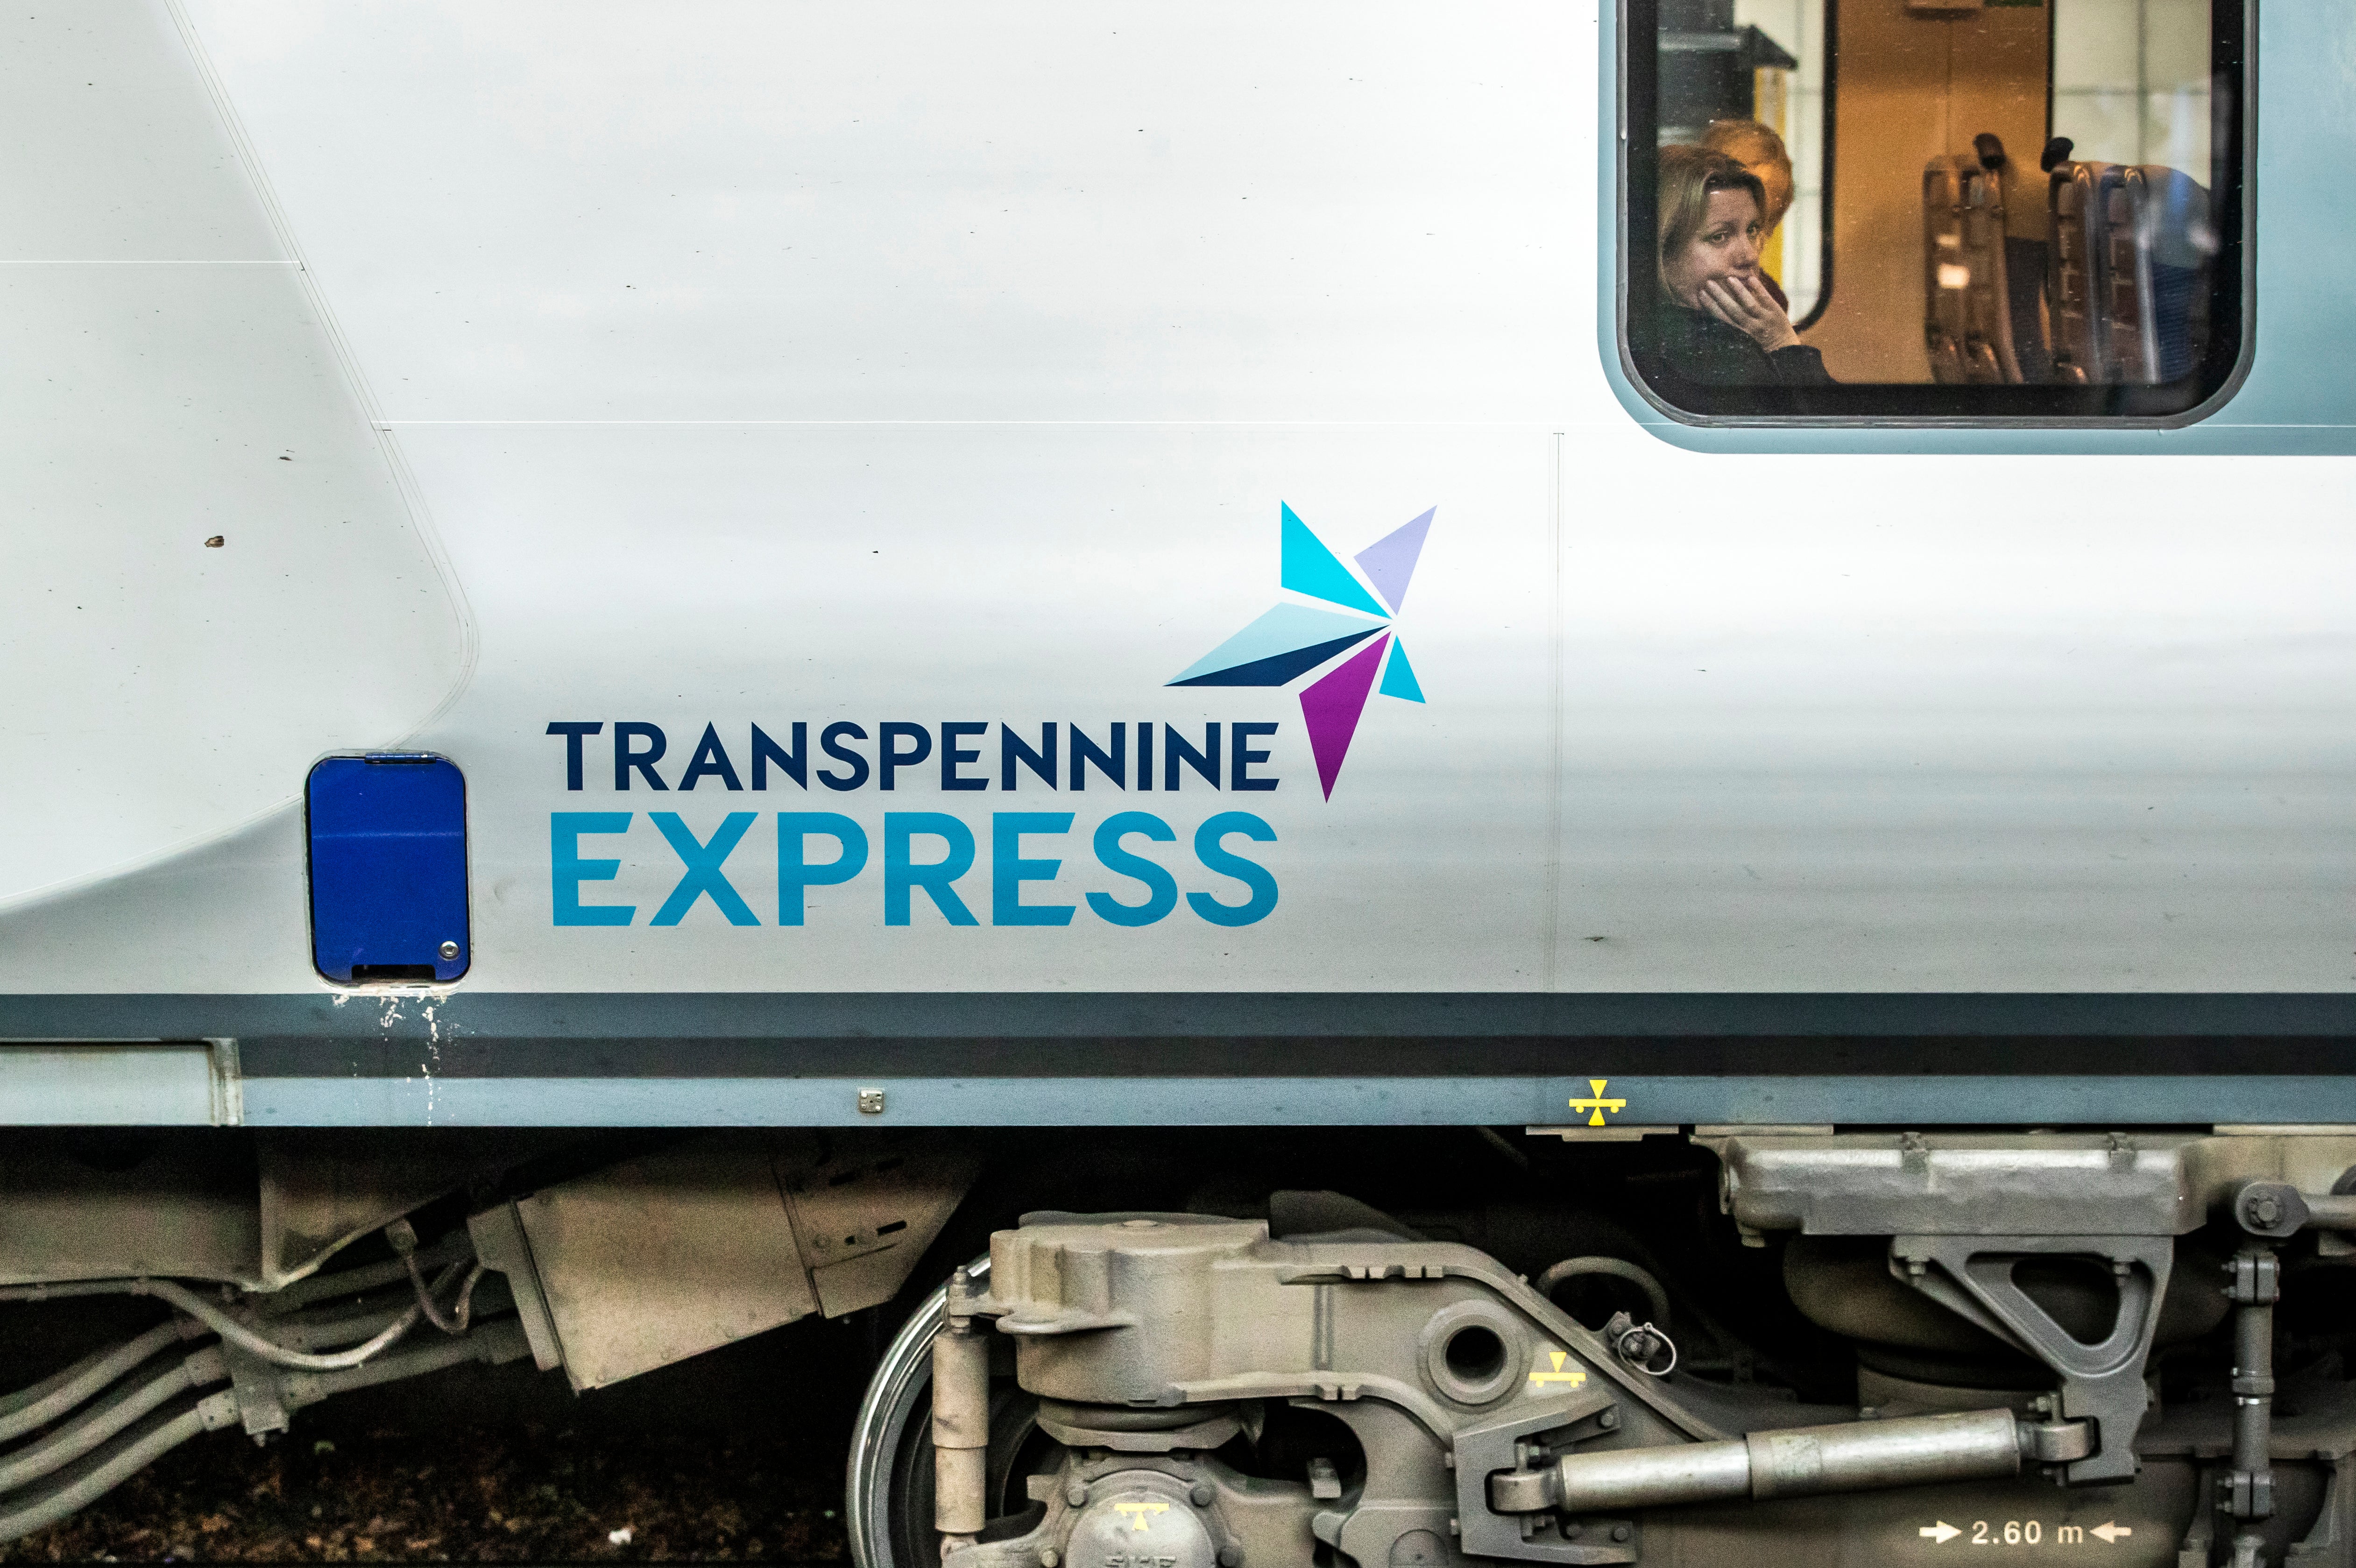 A TransPennine Express train at Leeds train station.